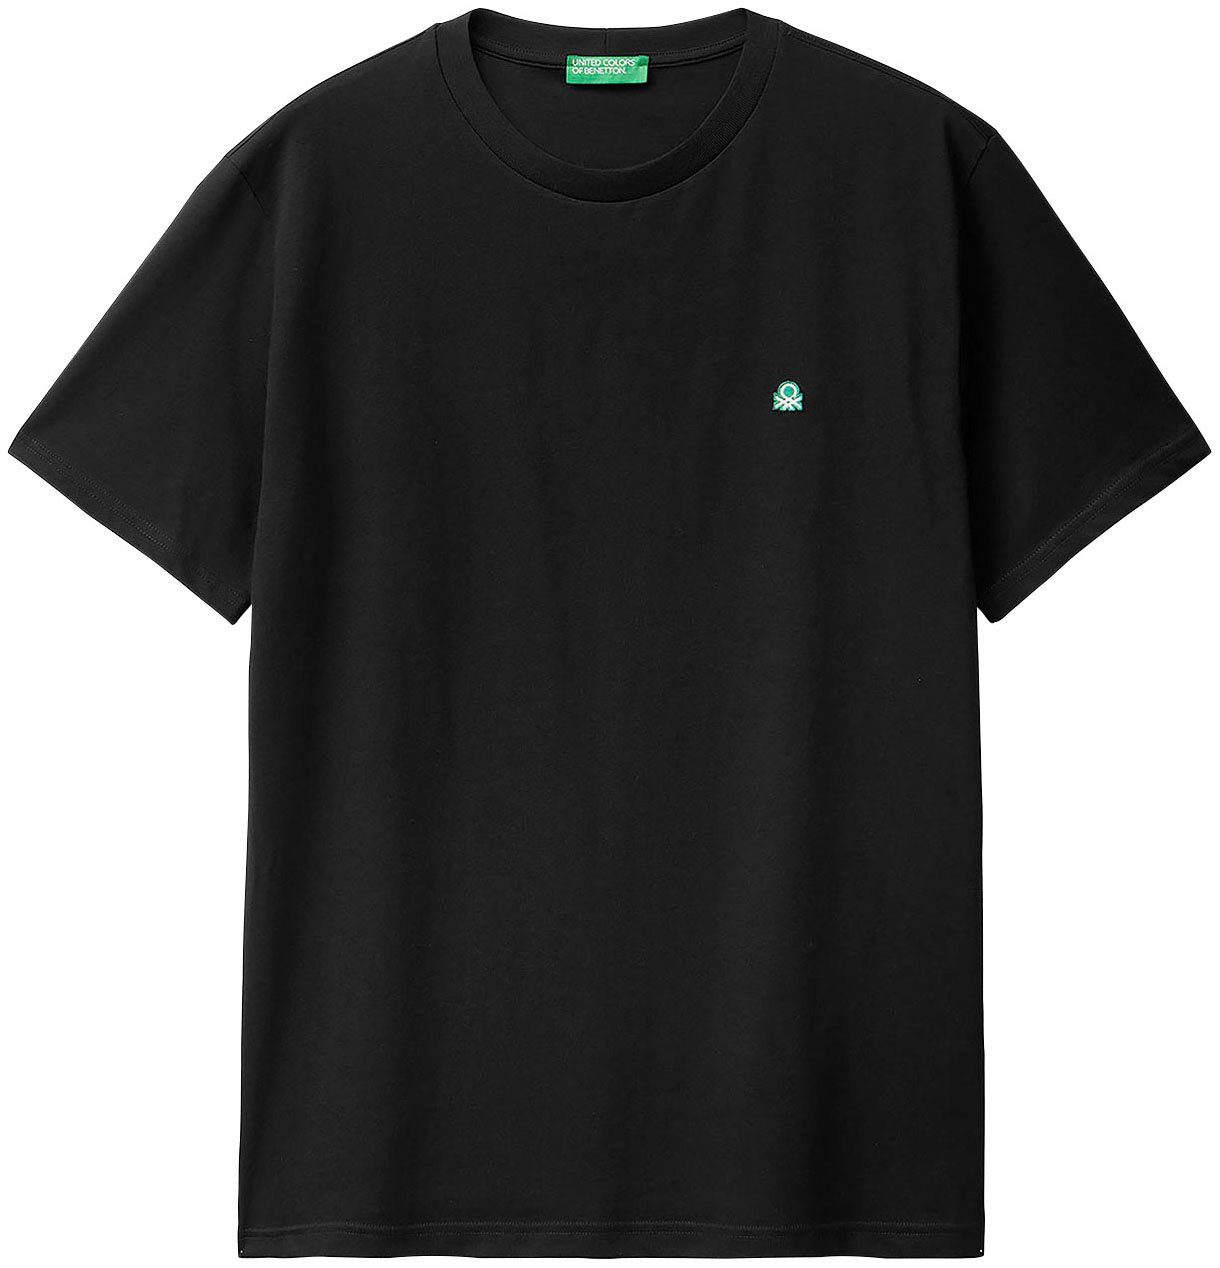 mit T-Shirt of schwarz United Label-Badge Colors Benetton